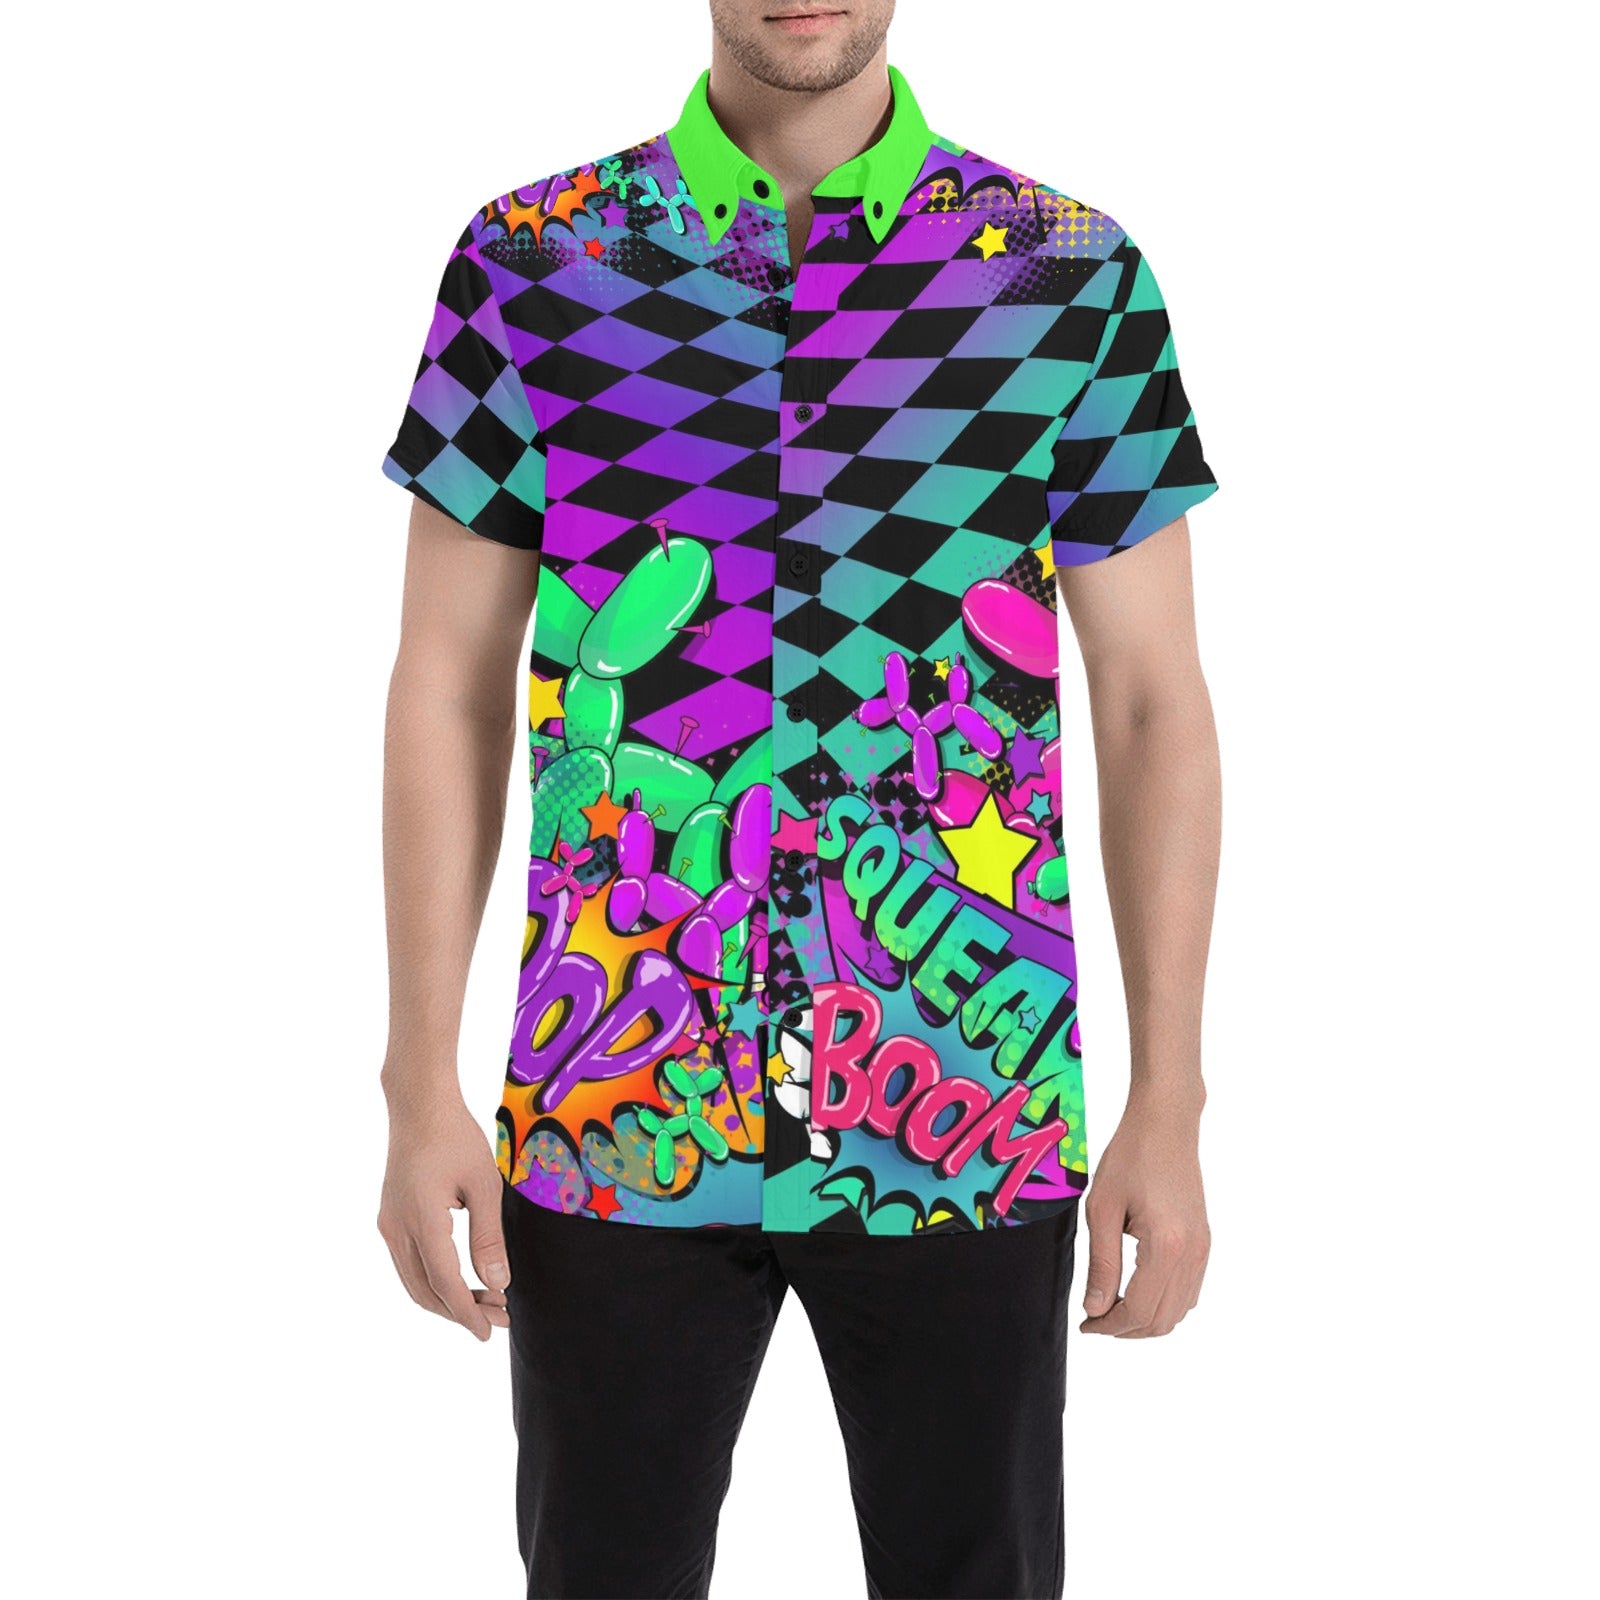 balloon artists shirt with fun colourful pop art design